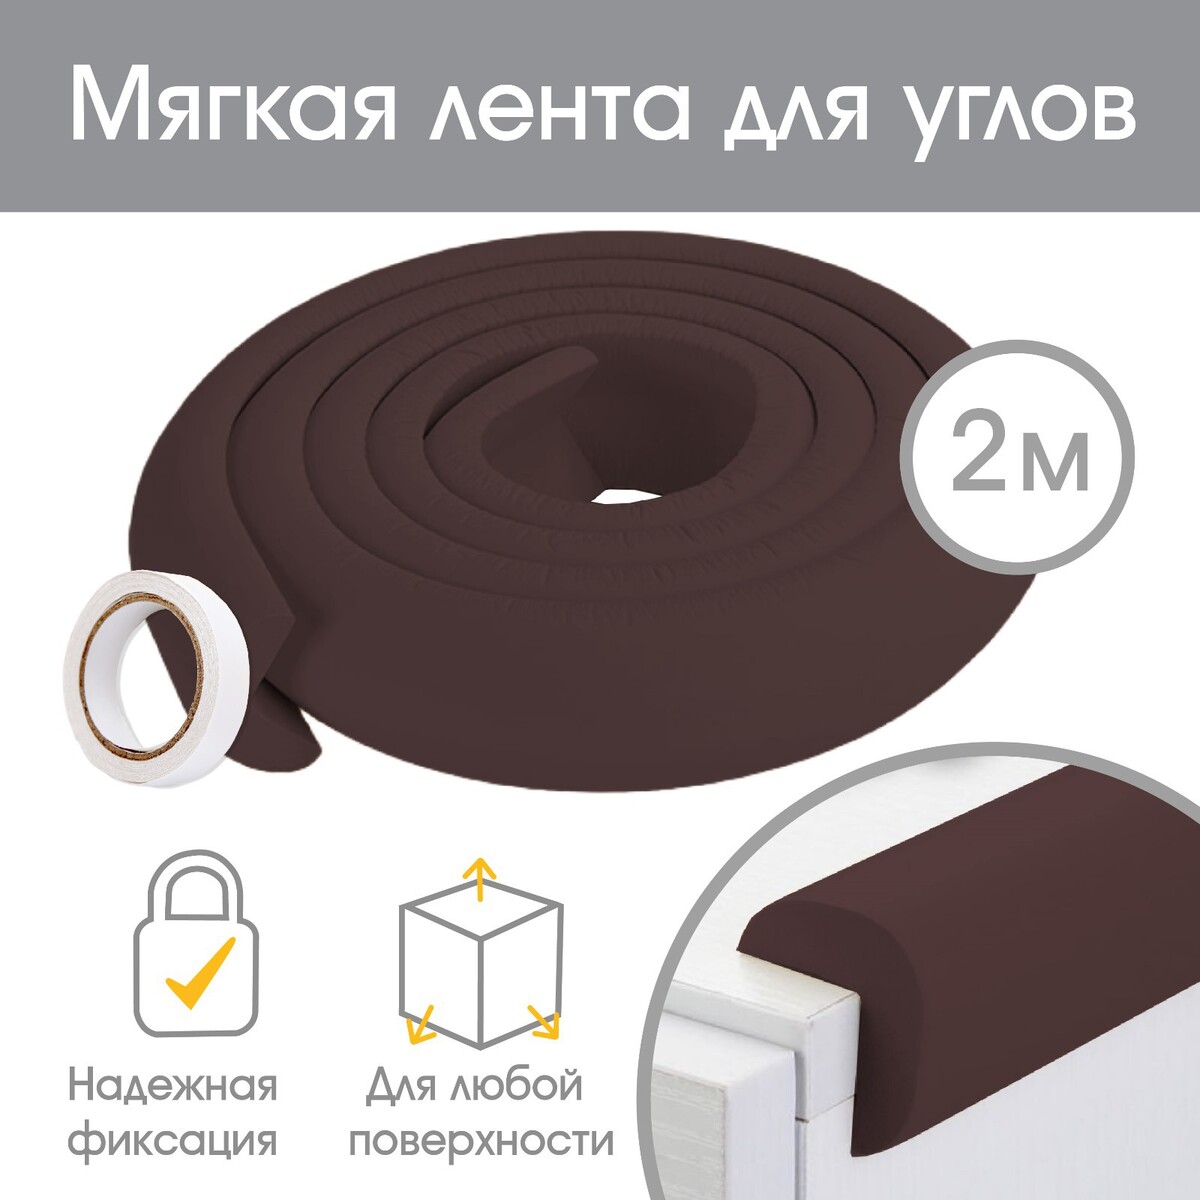 Лента для углов, 2 м., ширина 2,3 см., цвет коричневый лента для углов 2 м ширина 2 3 см